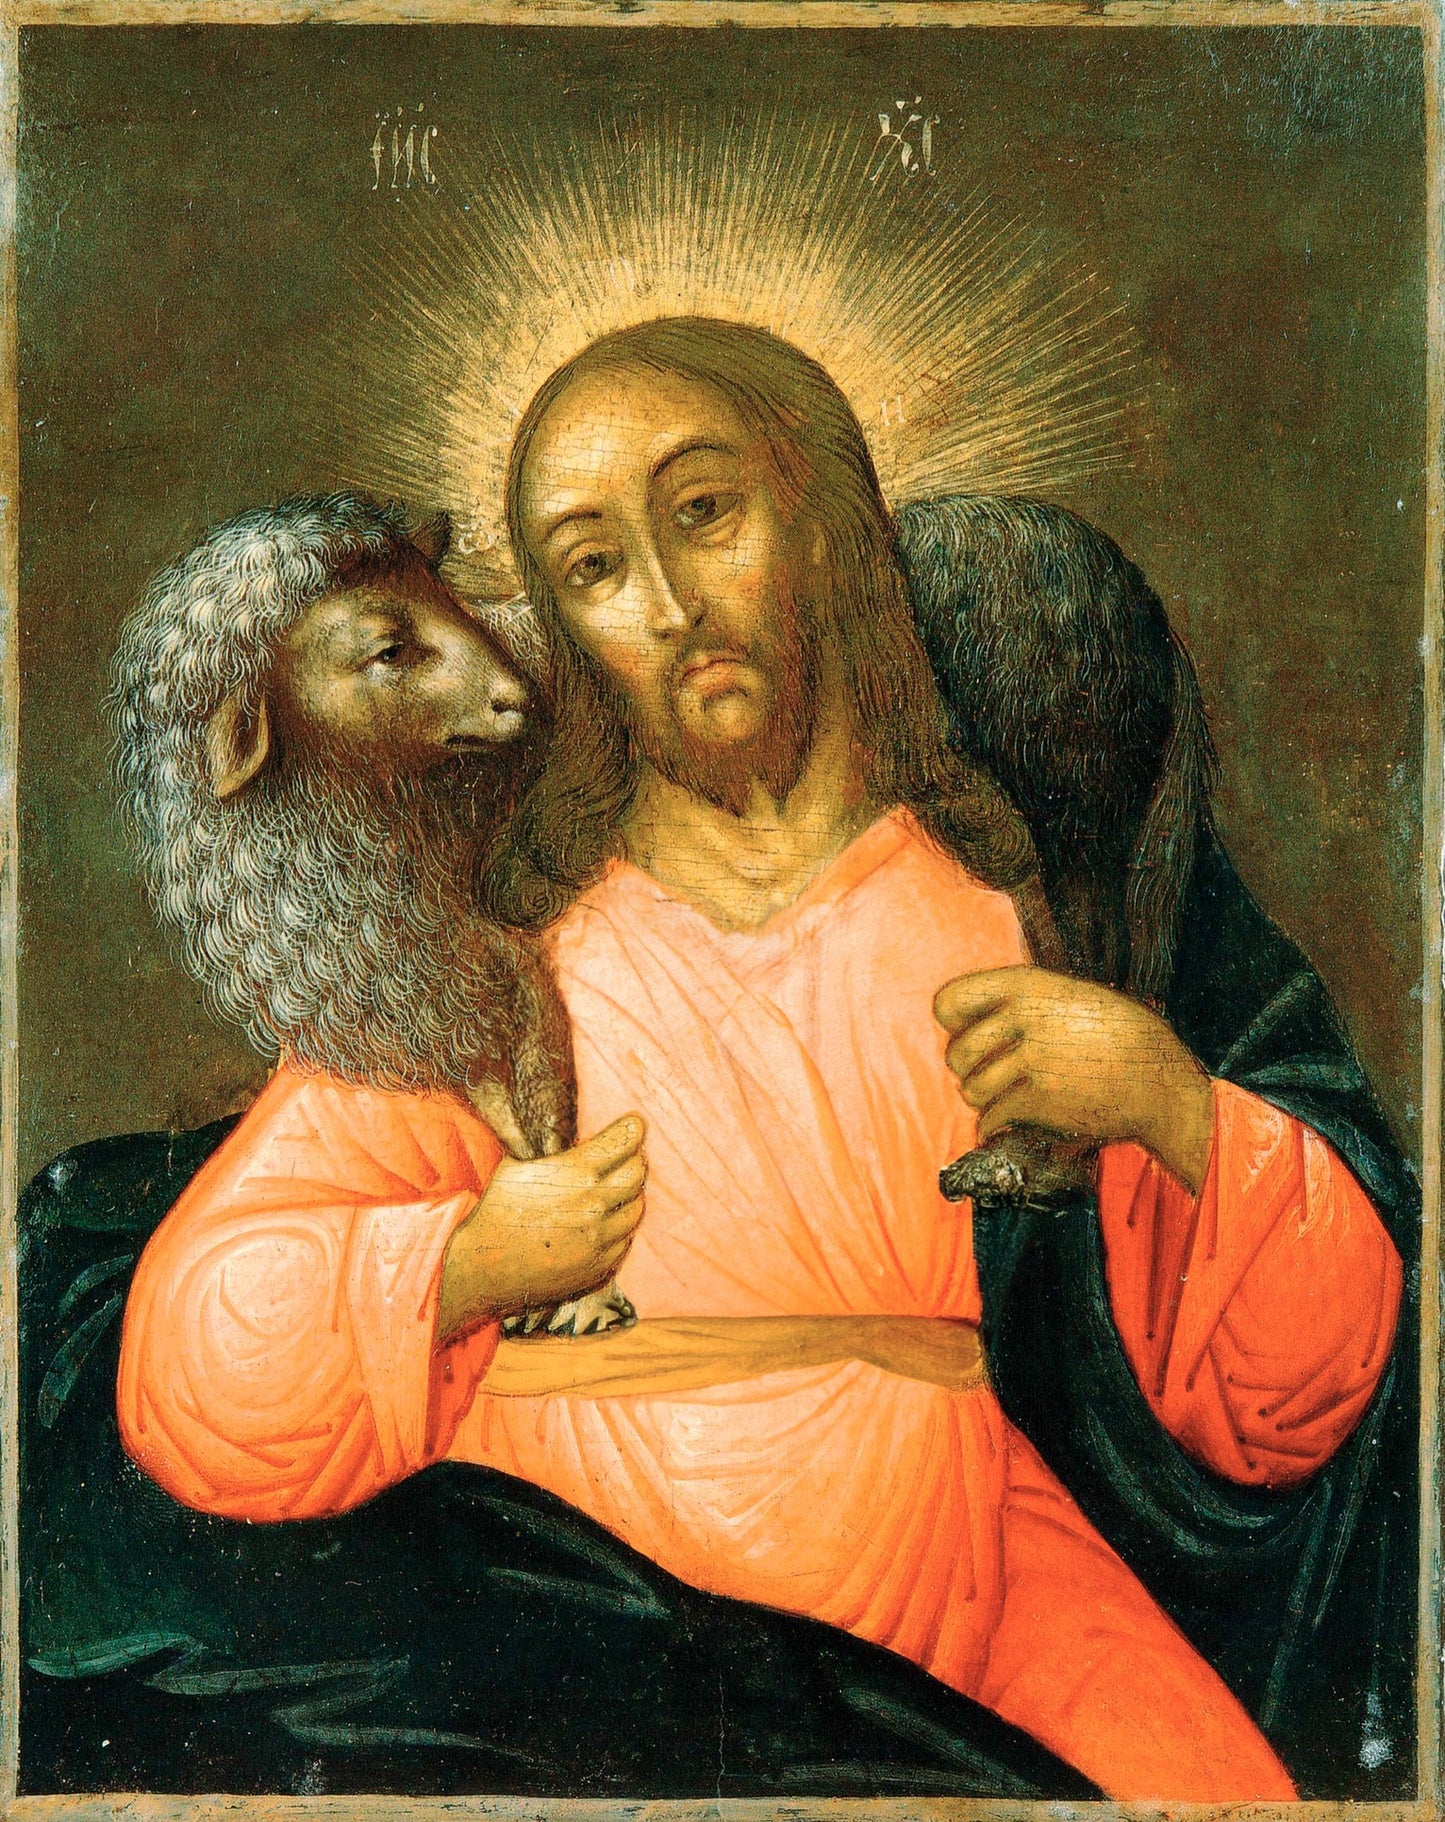 Icon of the Savior Jesus Christ "The Good Shepherd"